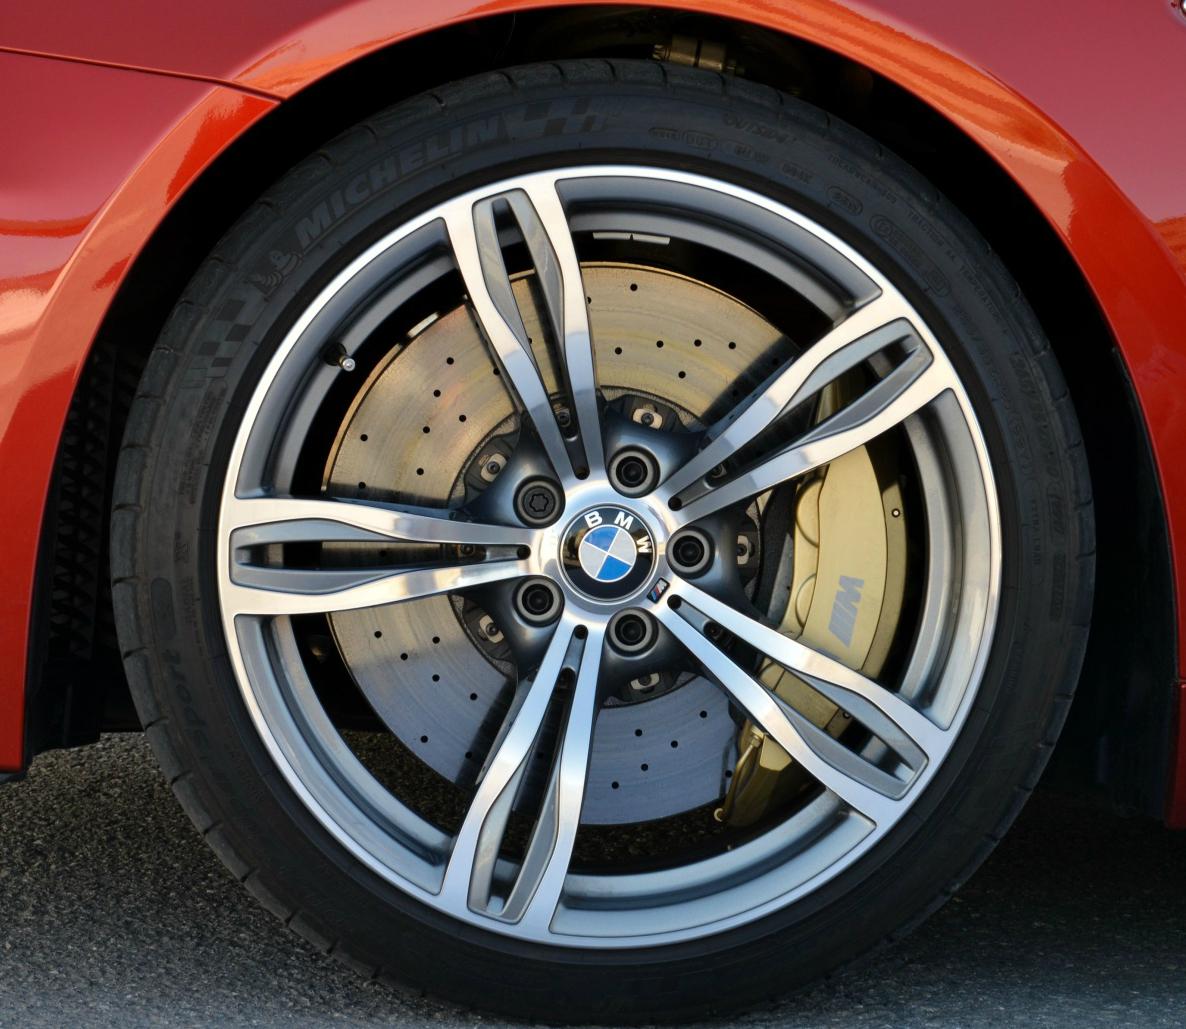 BMW M8 Spy Video Shows Glowing Brakes